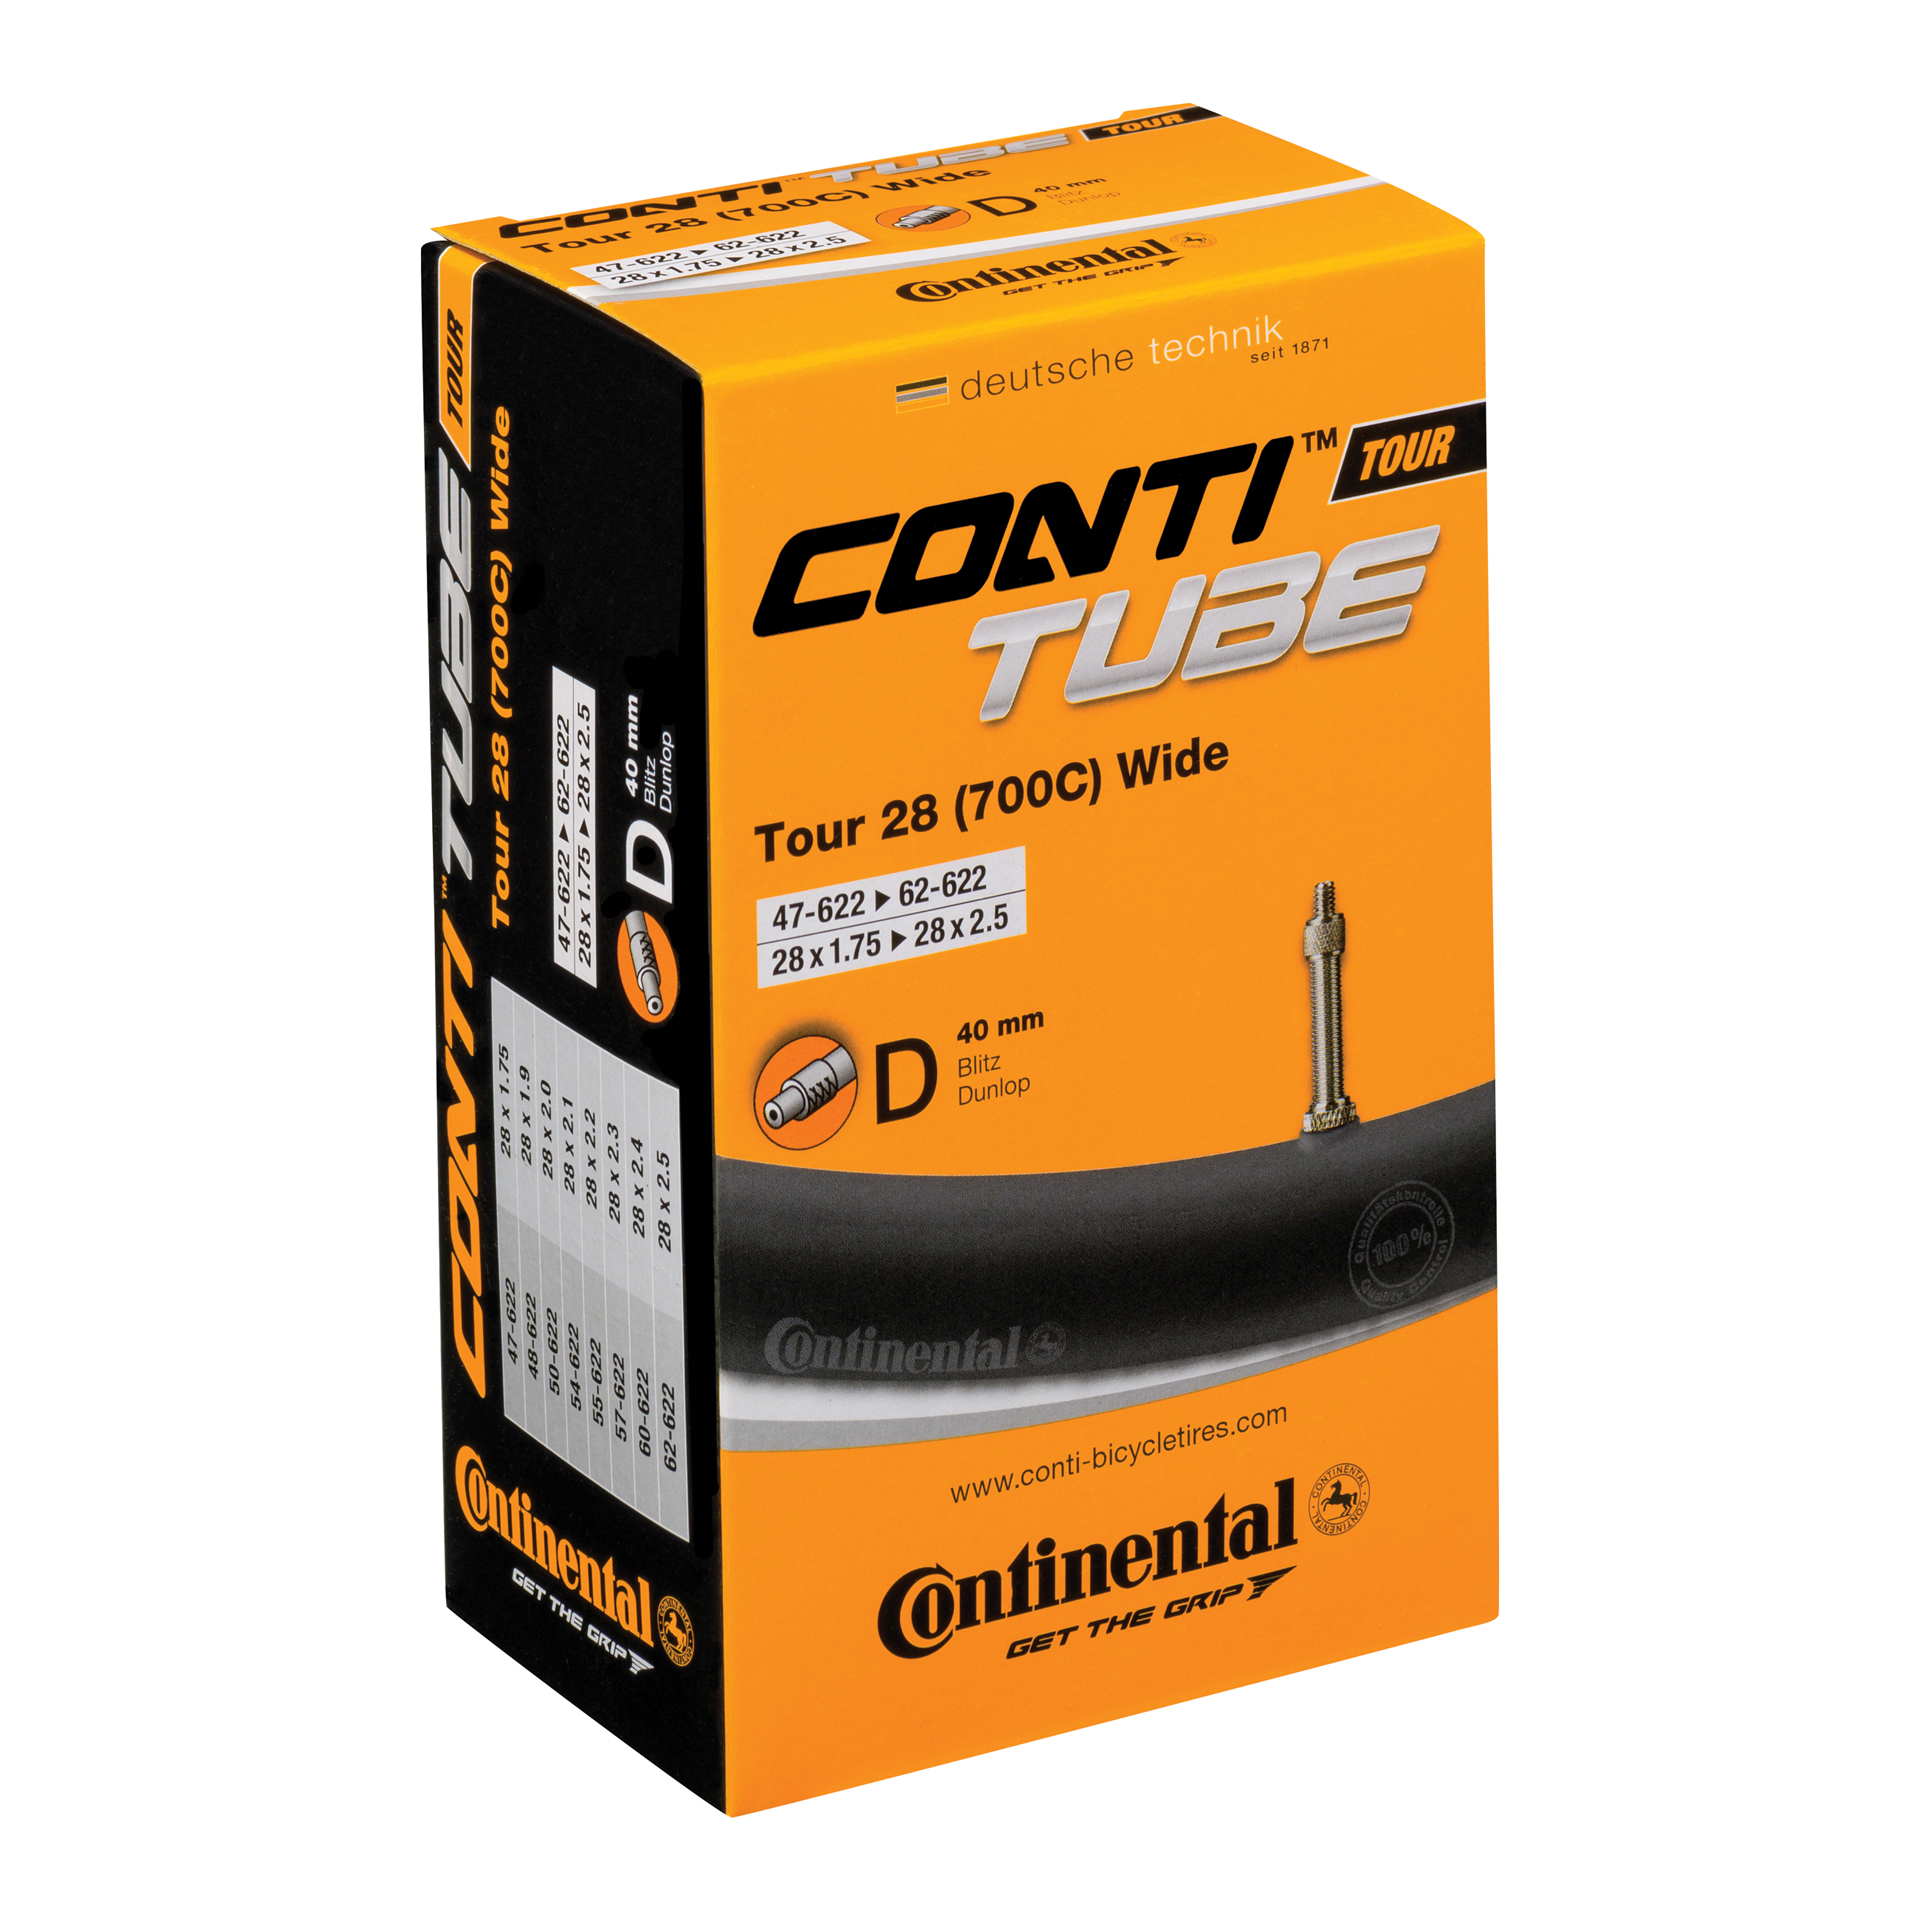 Continental Continental Binnenband Tour 28 Wide 40mm DV 5036708